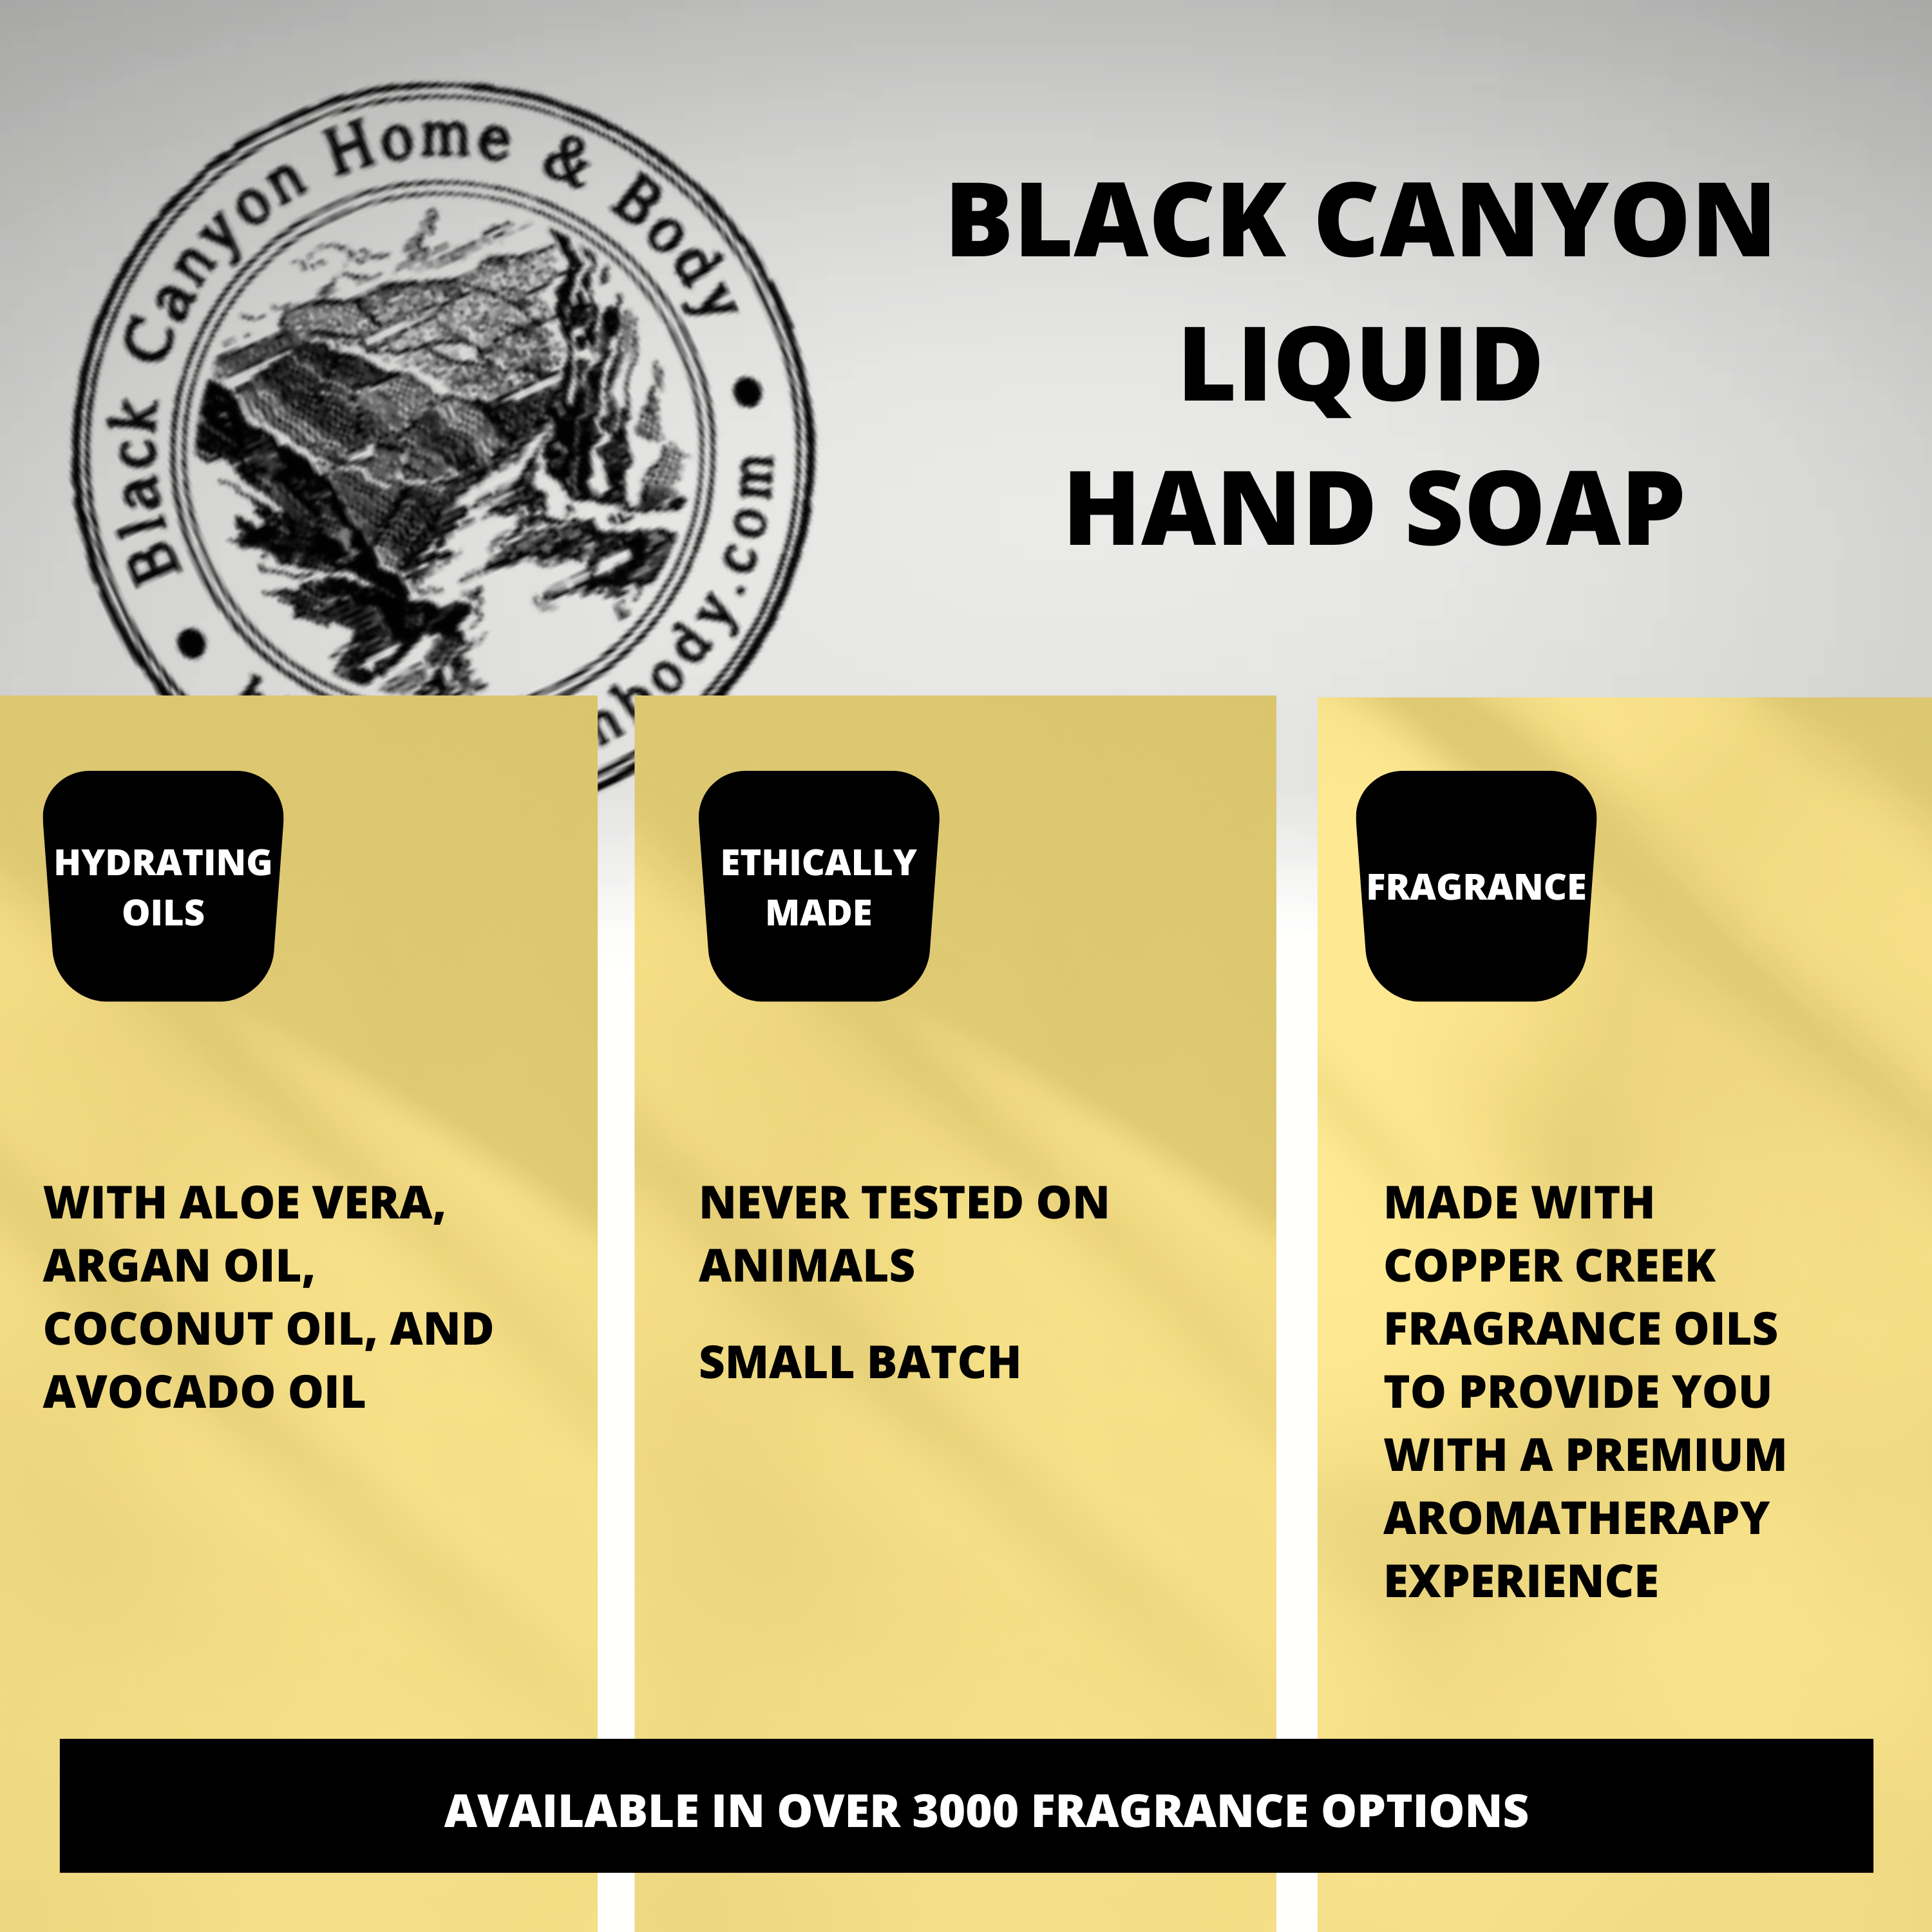 Black Canyon Black Vanilla & Vetiver Scented Liquid Hand Soap